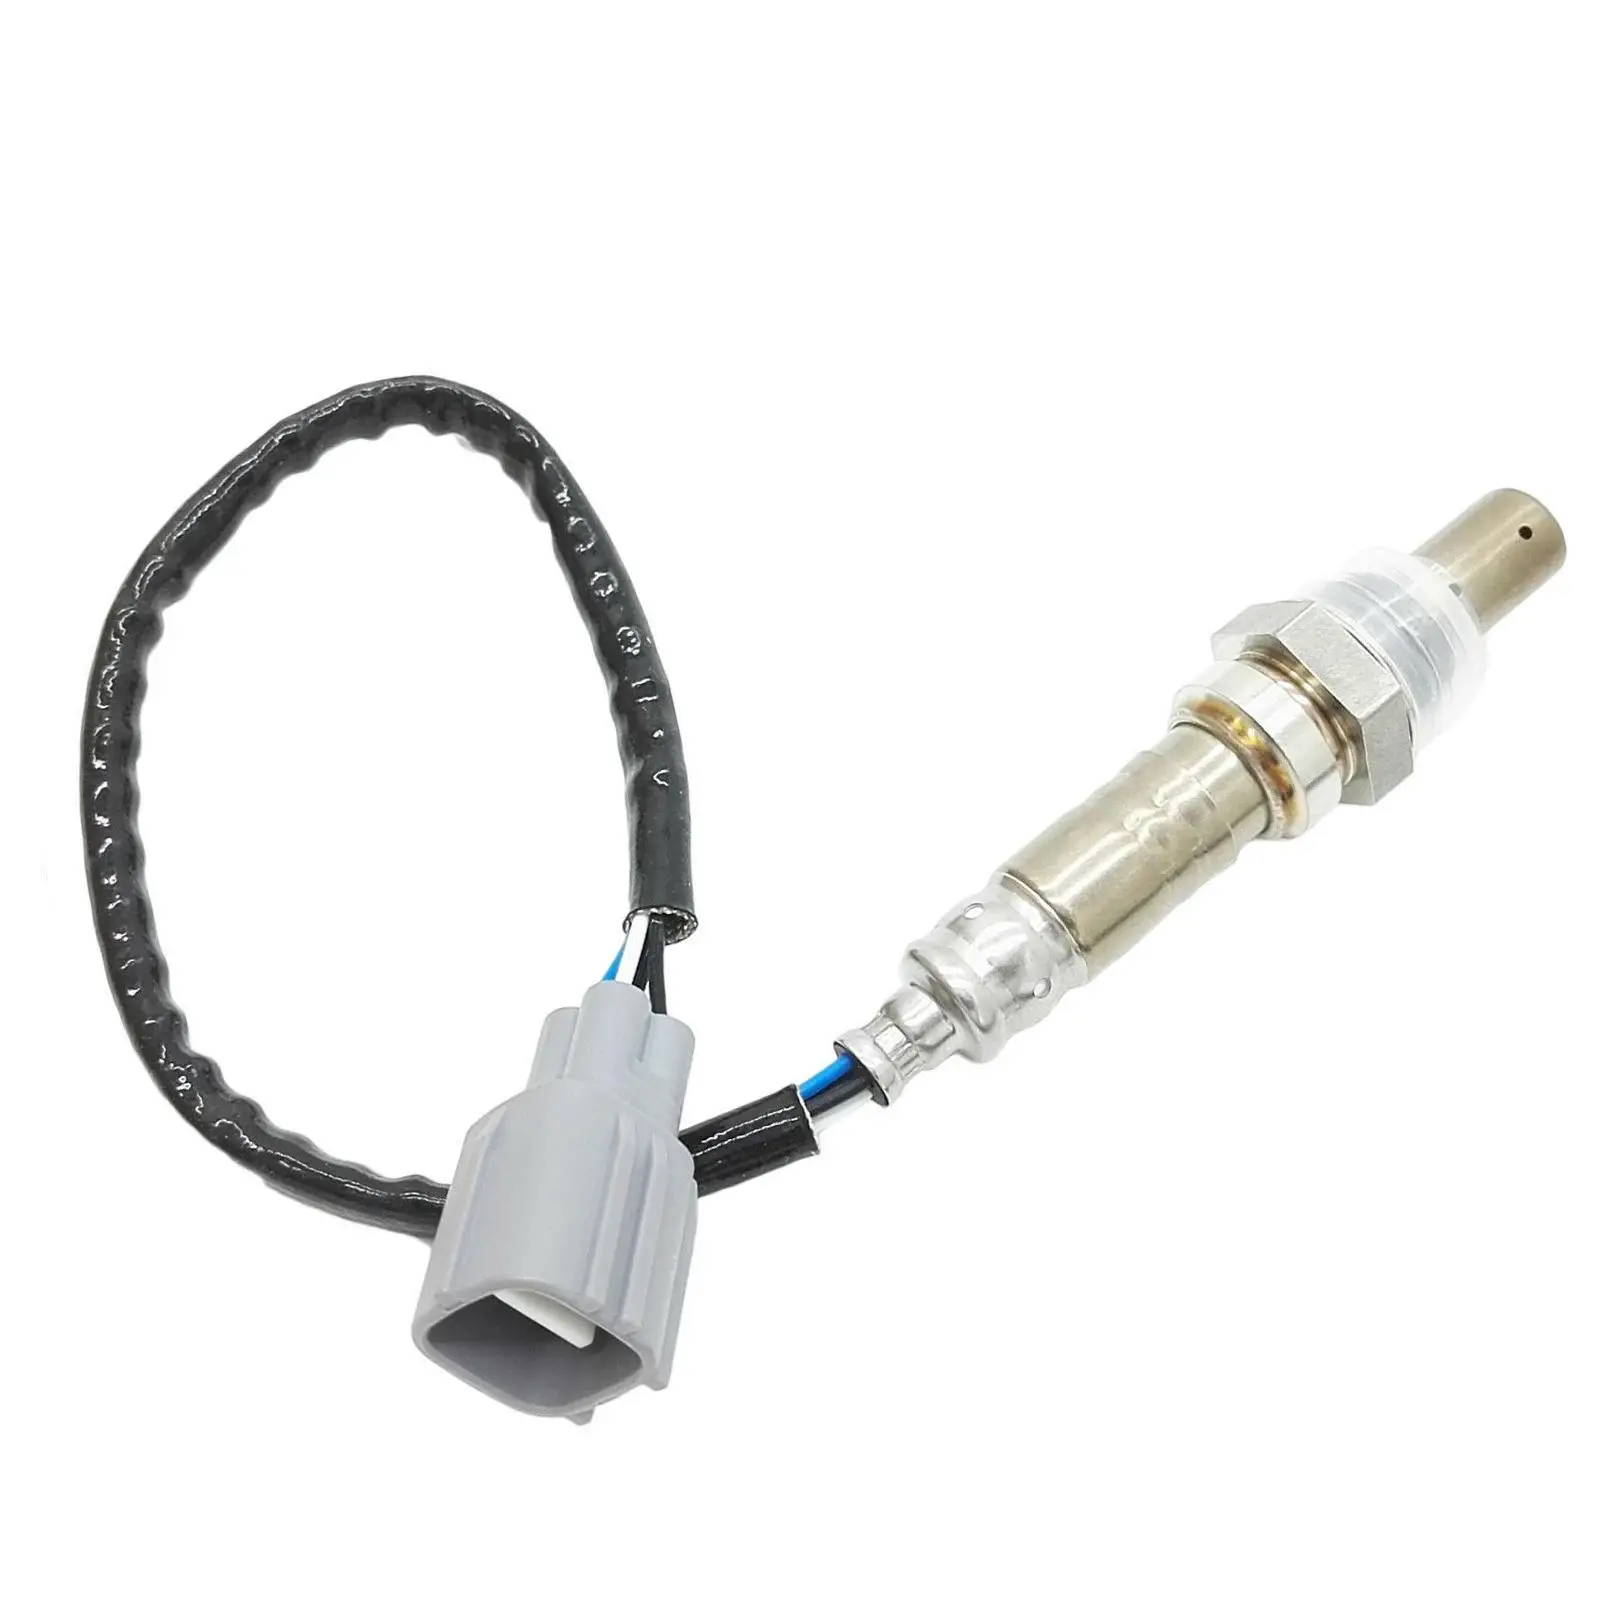  Ratio Upstream O2 Sensor Compatible with 34-9009 Accessories